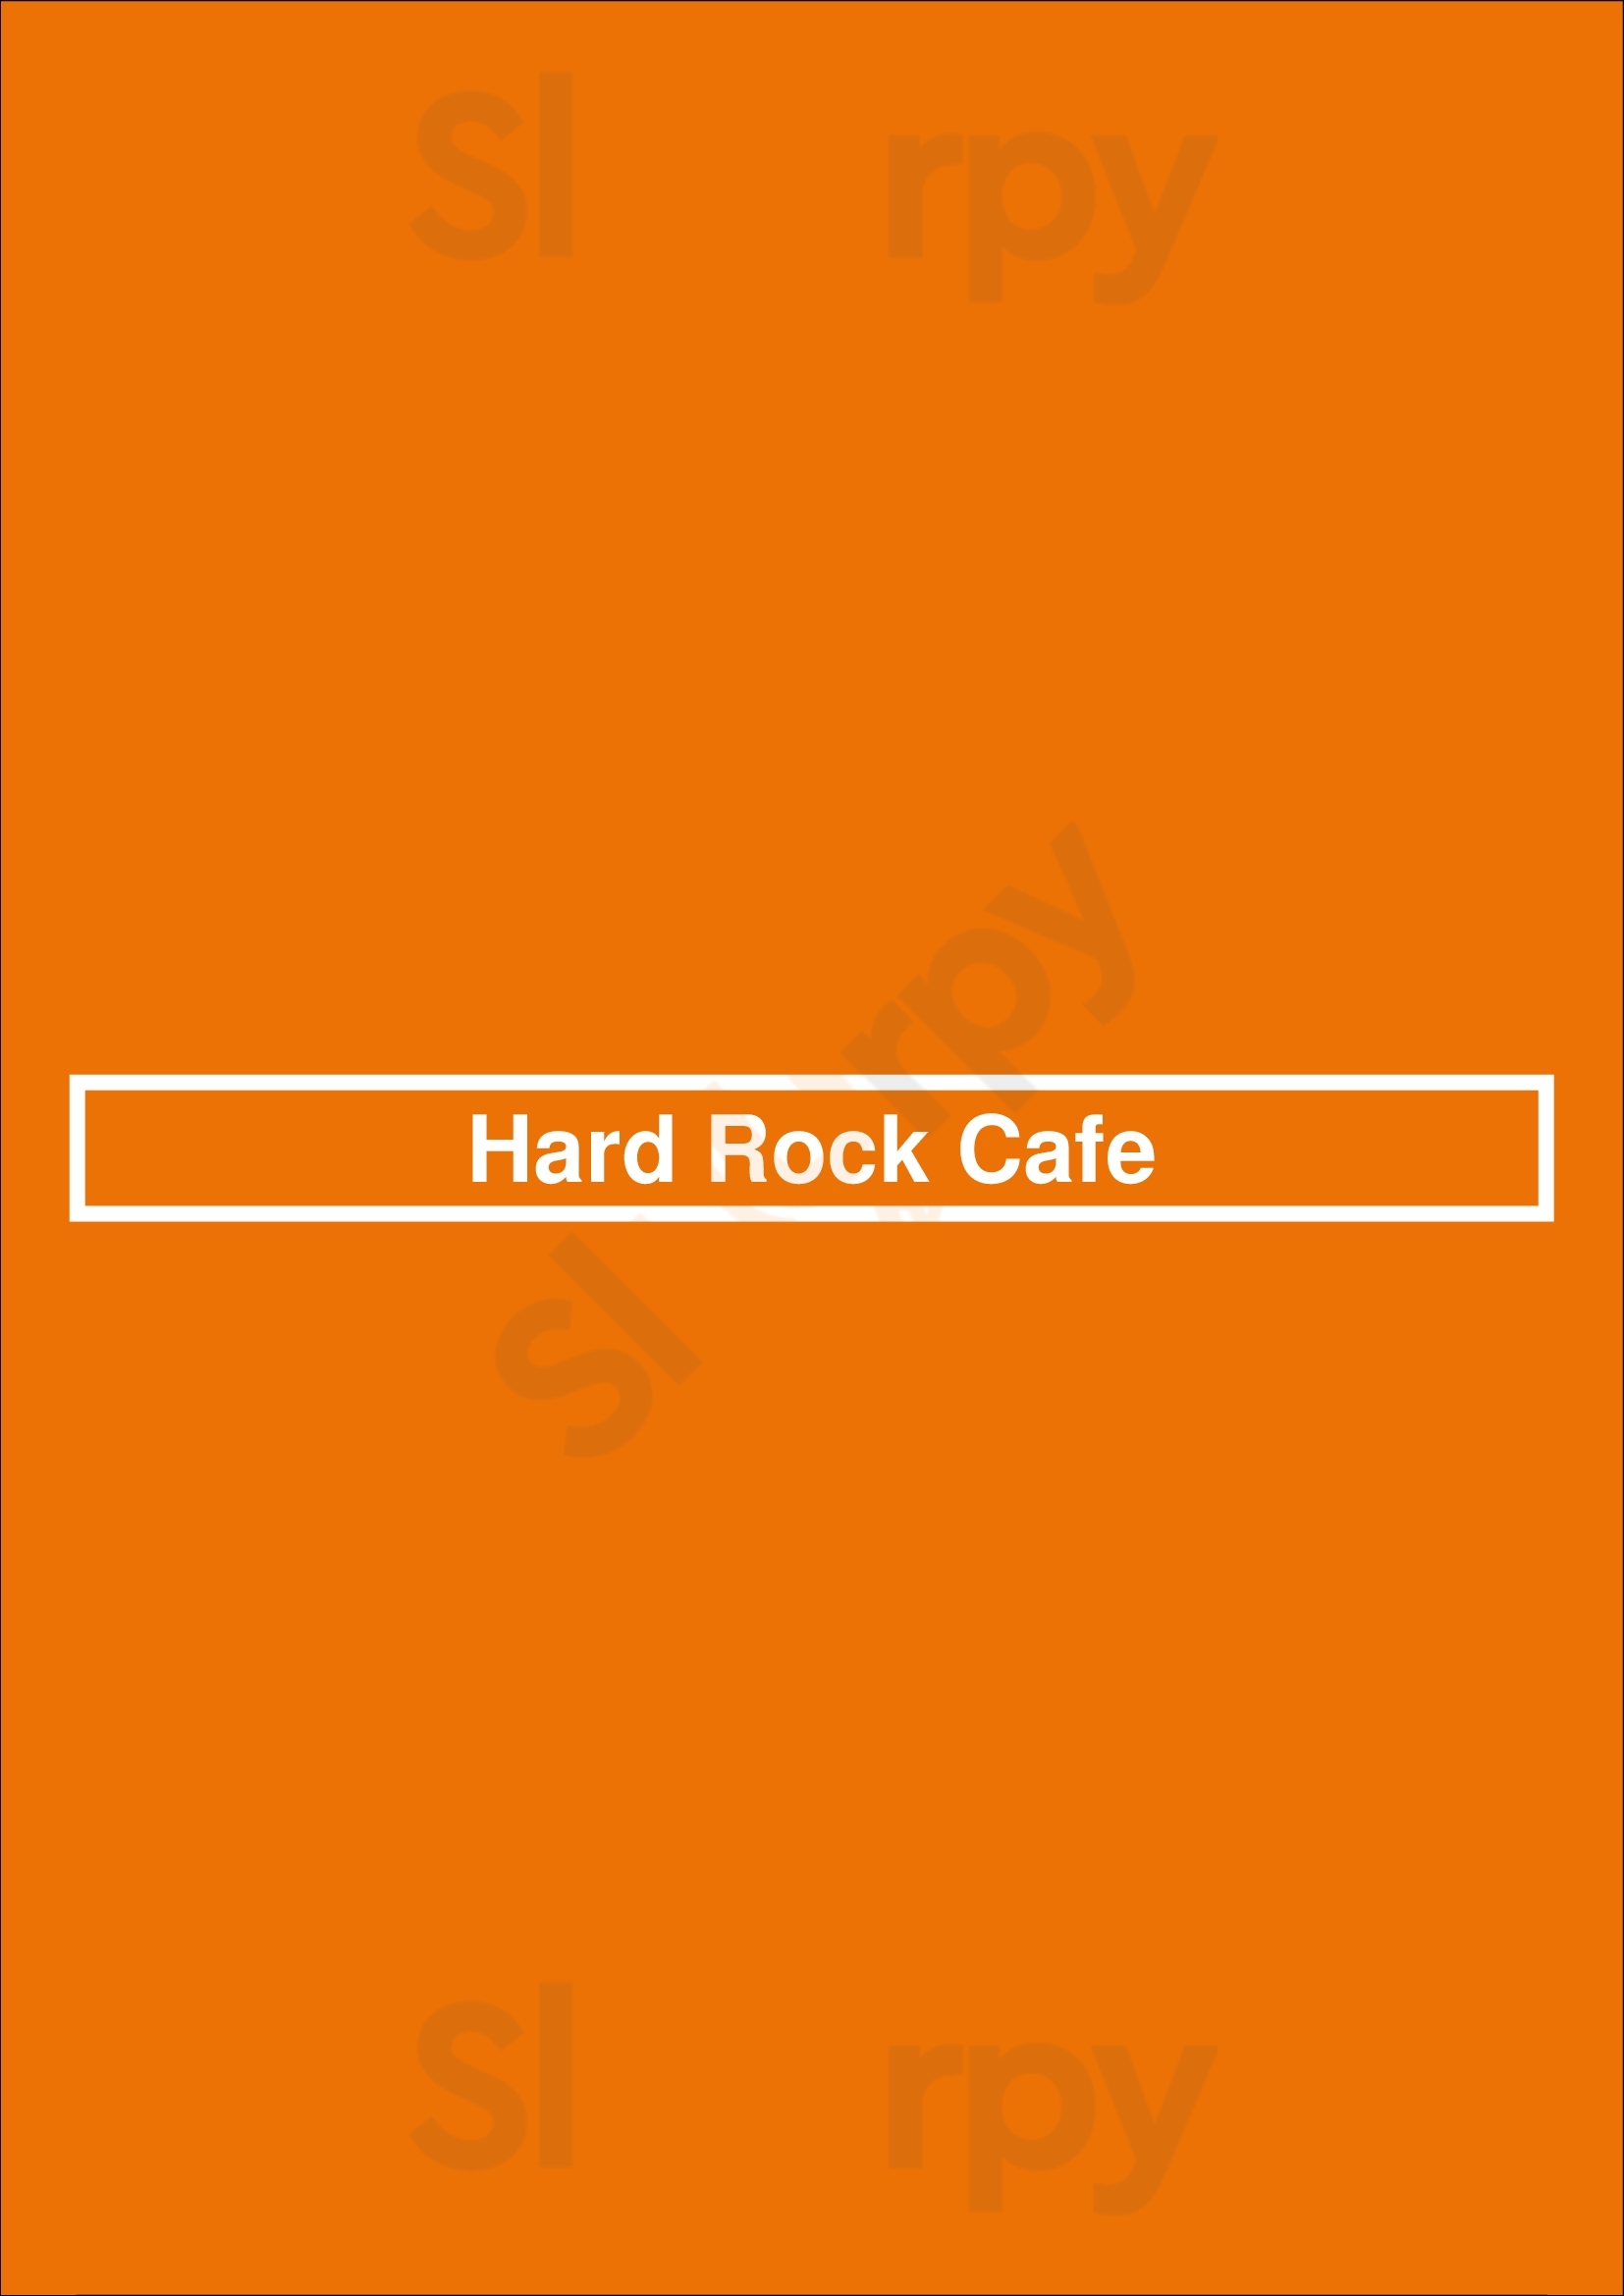 Hard Rock Cafe San Francisco Menu - 1